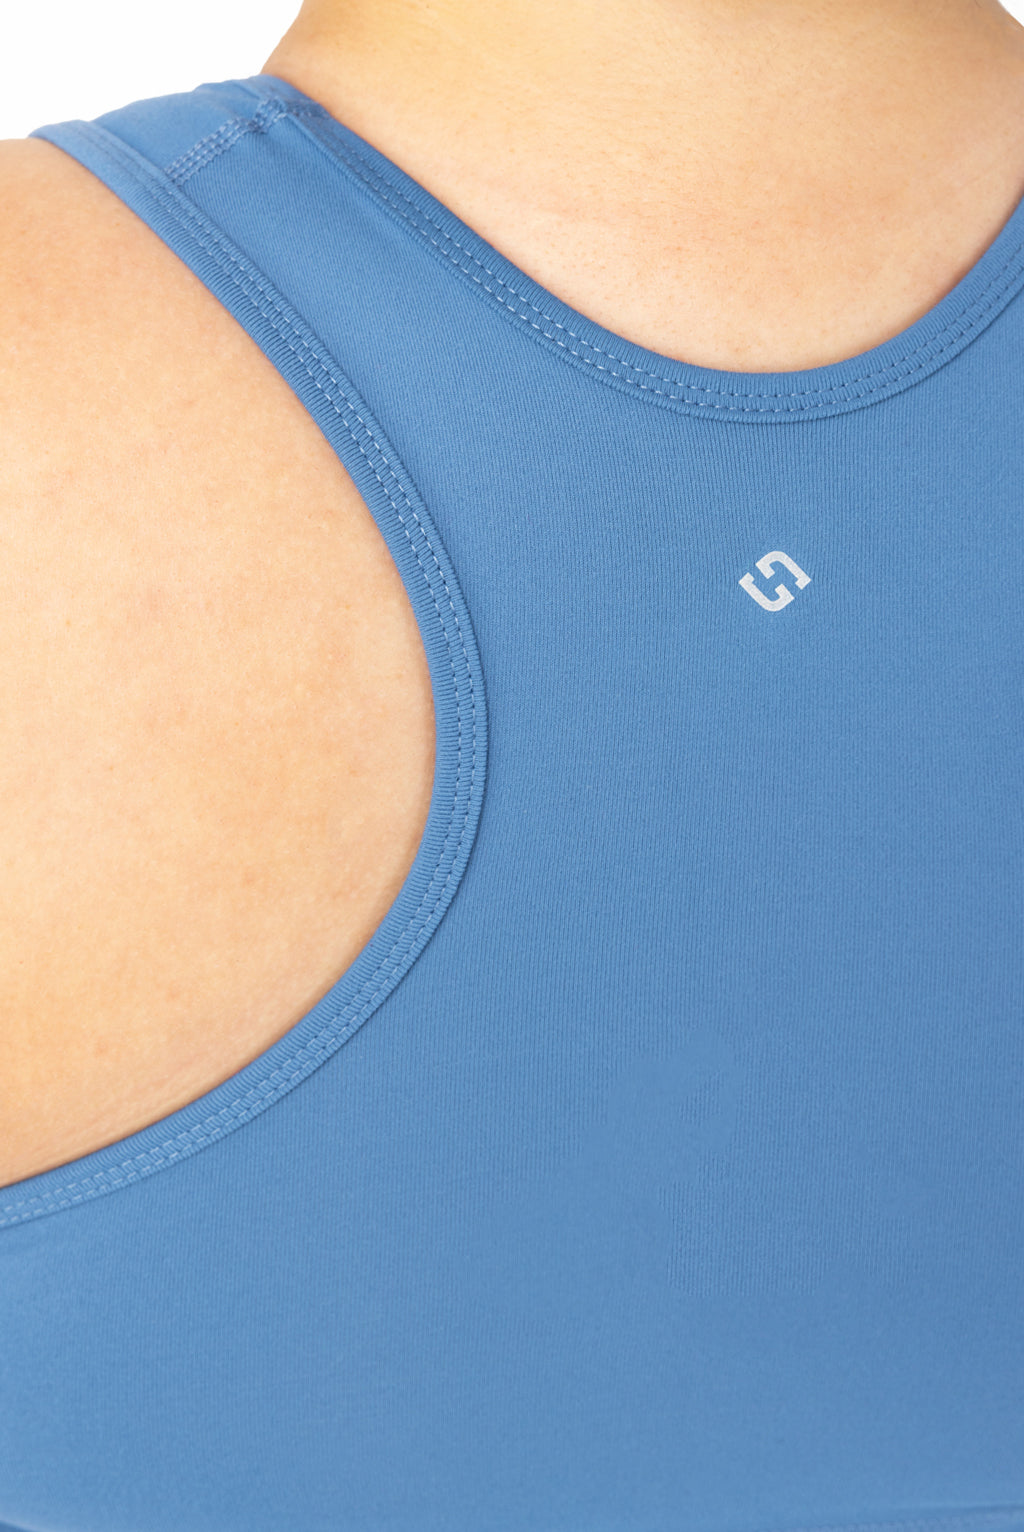 plus size compression sports bra, blue, back